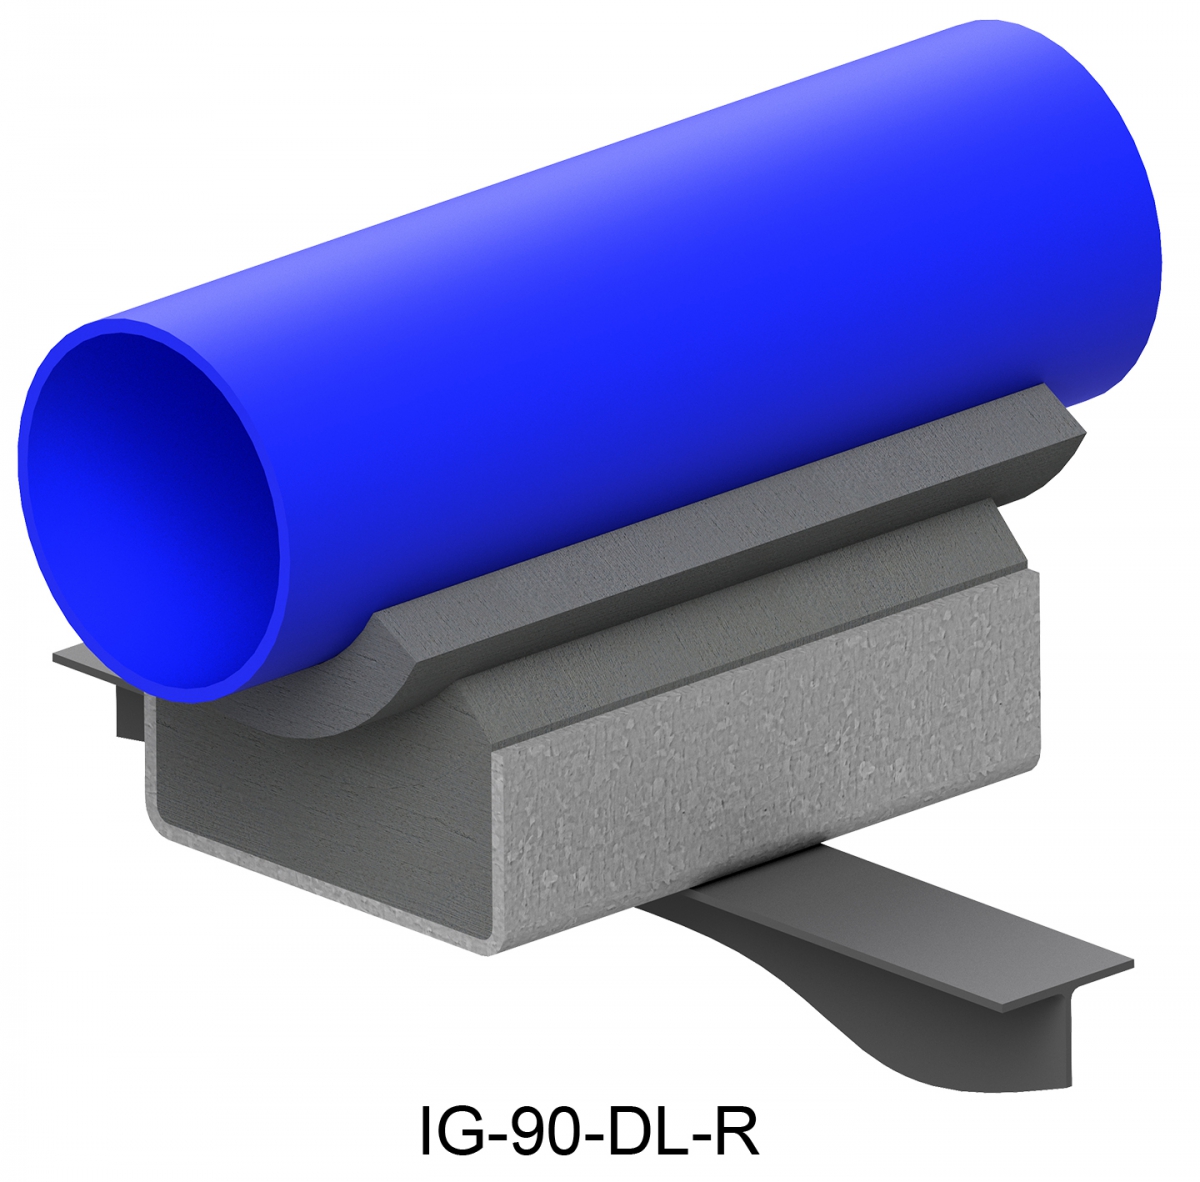 IG-90-DL-R Insul-guide